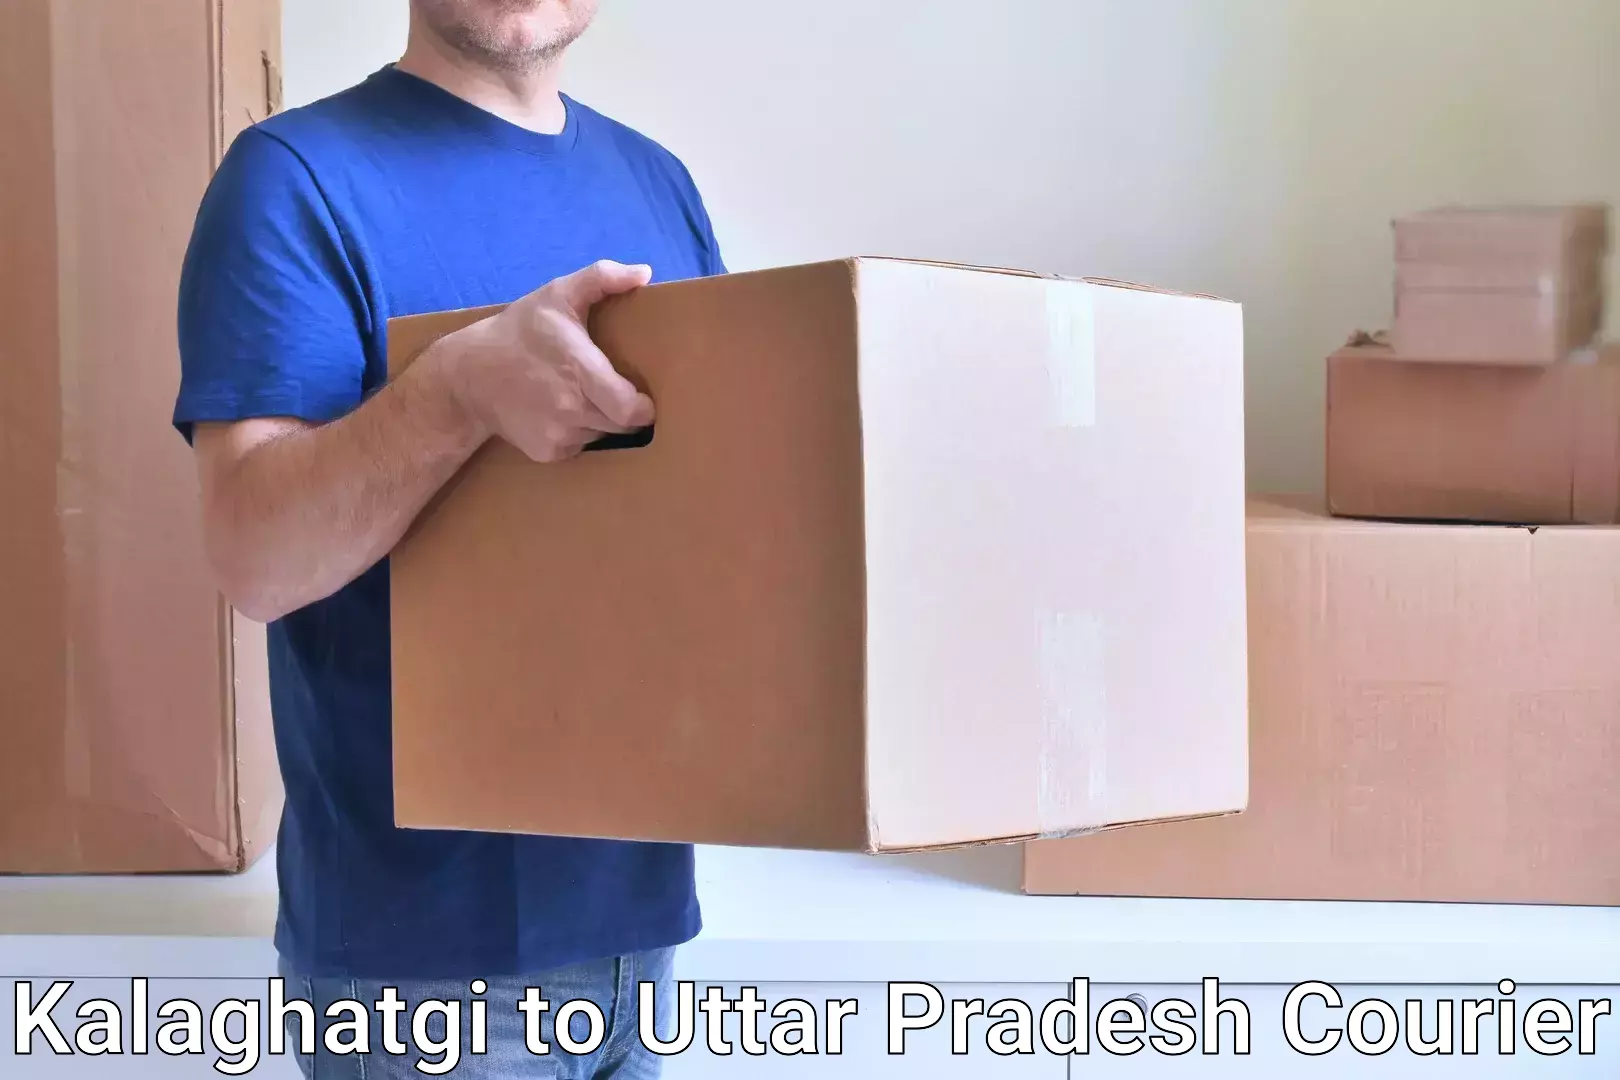 24/7 courier service in Kalaghatgi to Uttar Pradesh